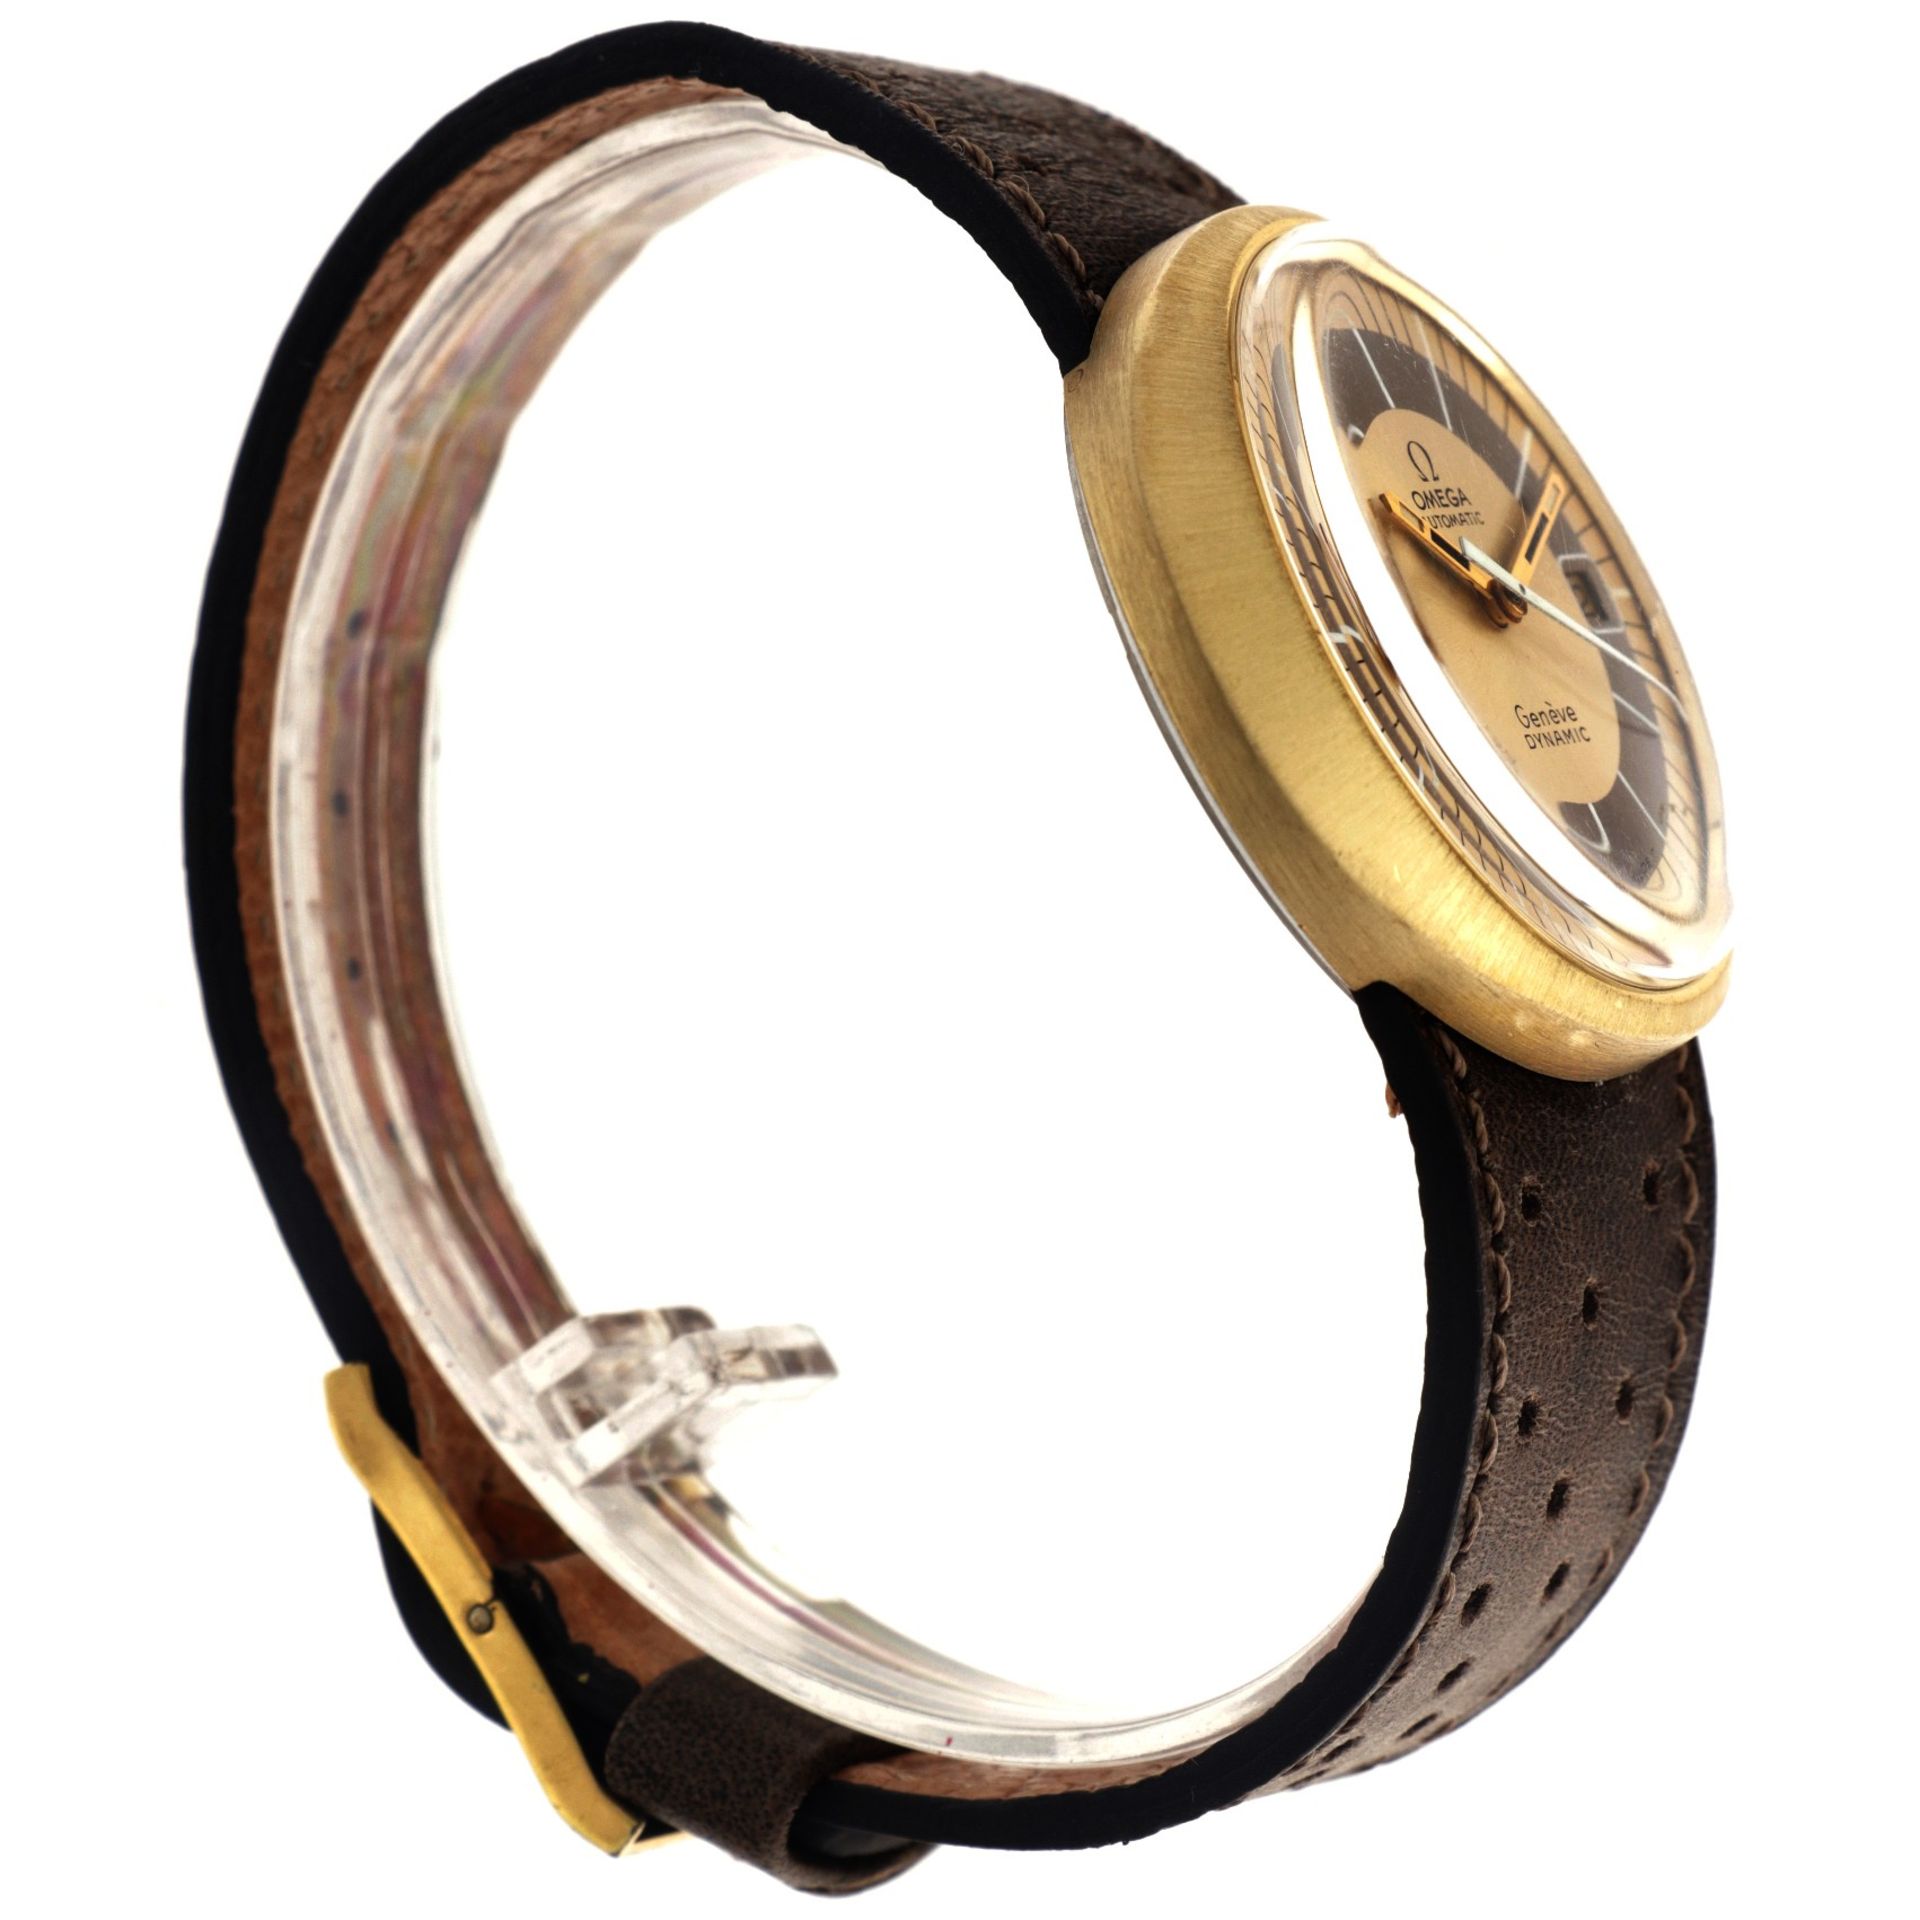 No Reserve - Omega Geneva Dynamic 166.079 - Men's watch.  - Image 4 of 5